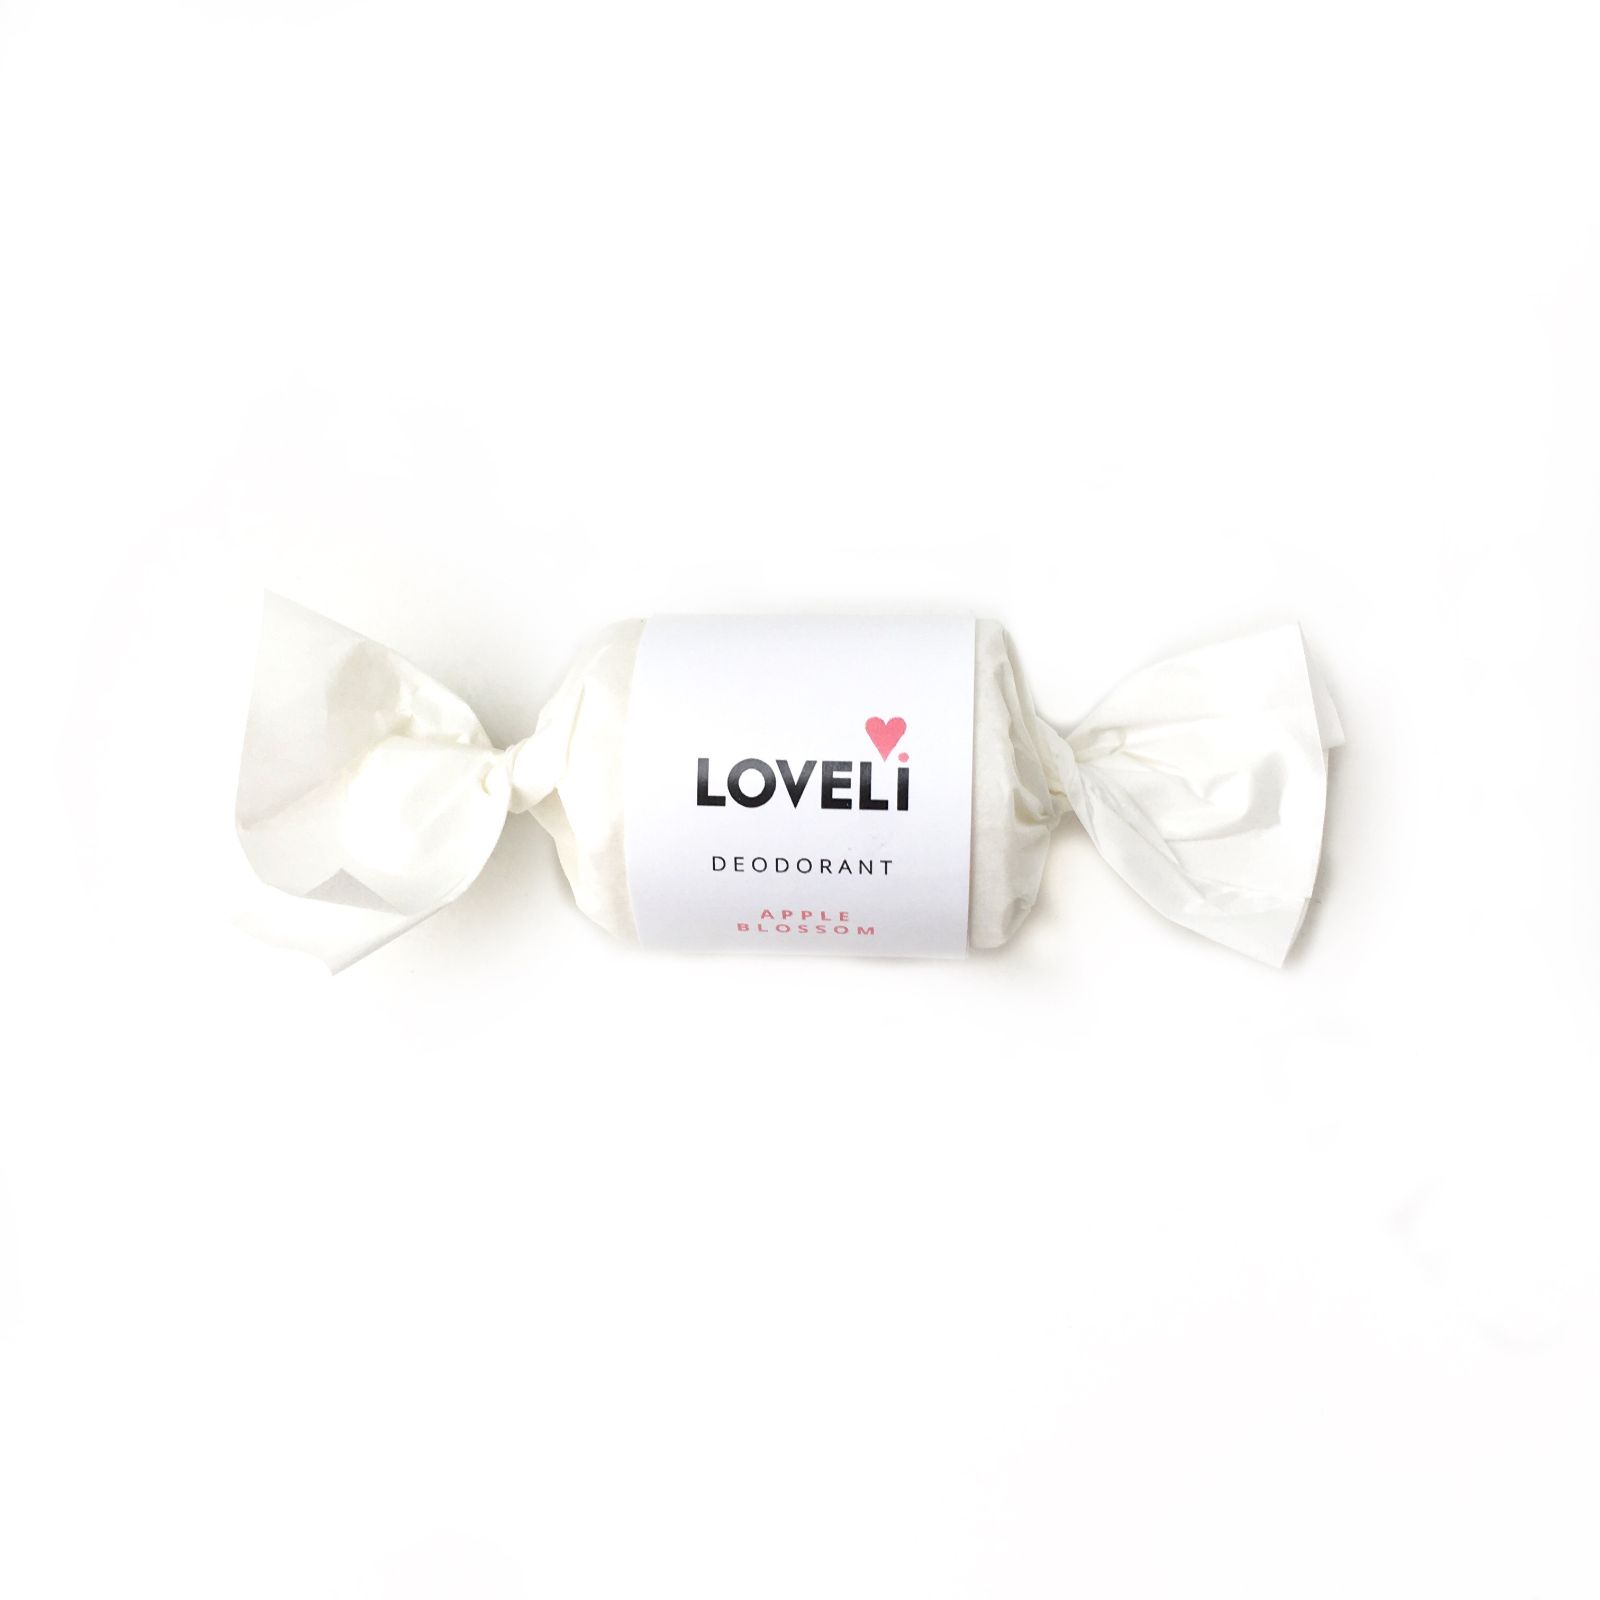 Loveli Deodorant 75ml refill